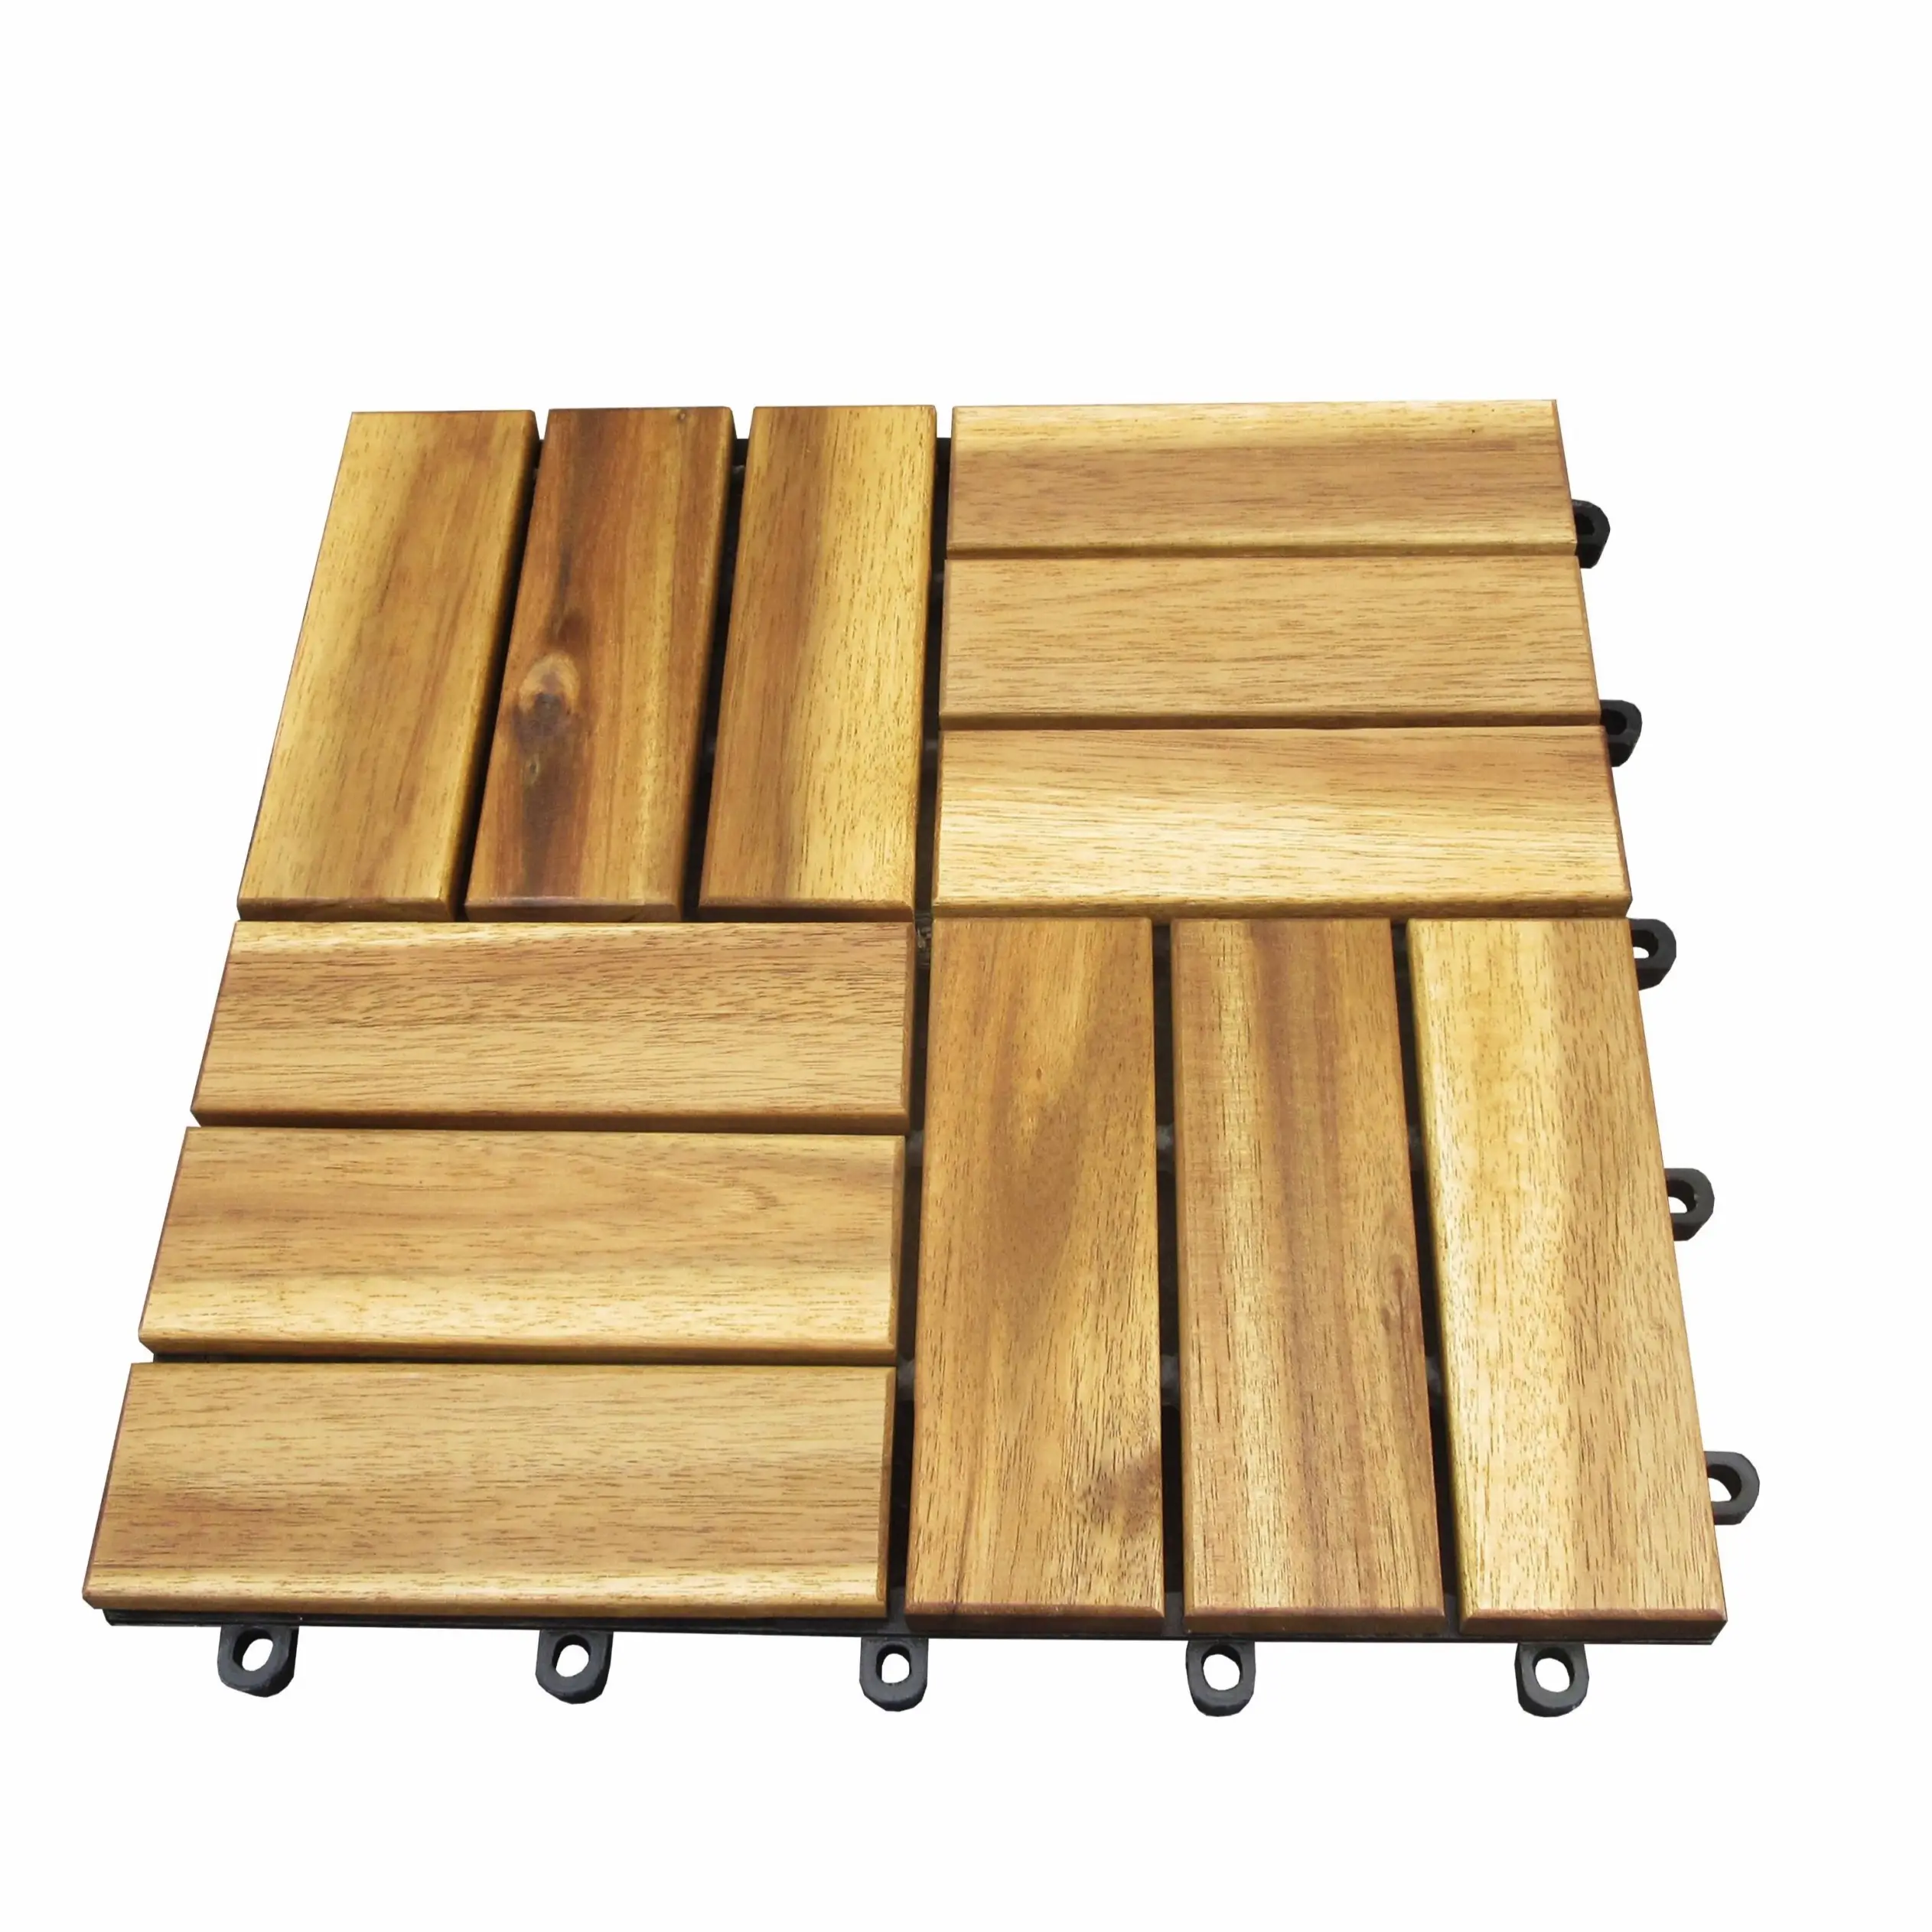 OEM Vietnam pabrik ubin kayu lantai 12 papan kayu acacia ubin dekking untuk ruang tamu luar ruangan